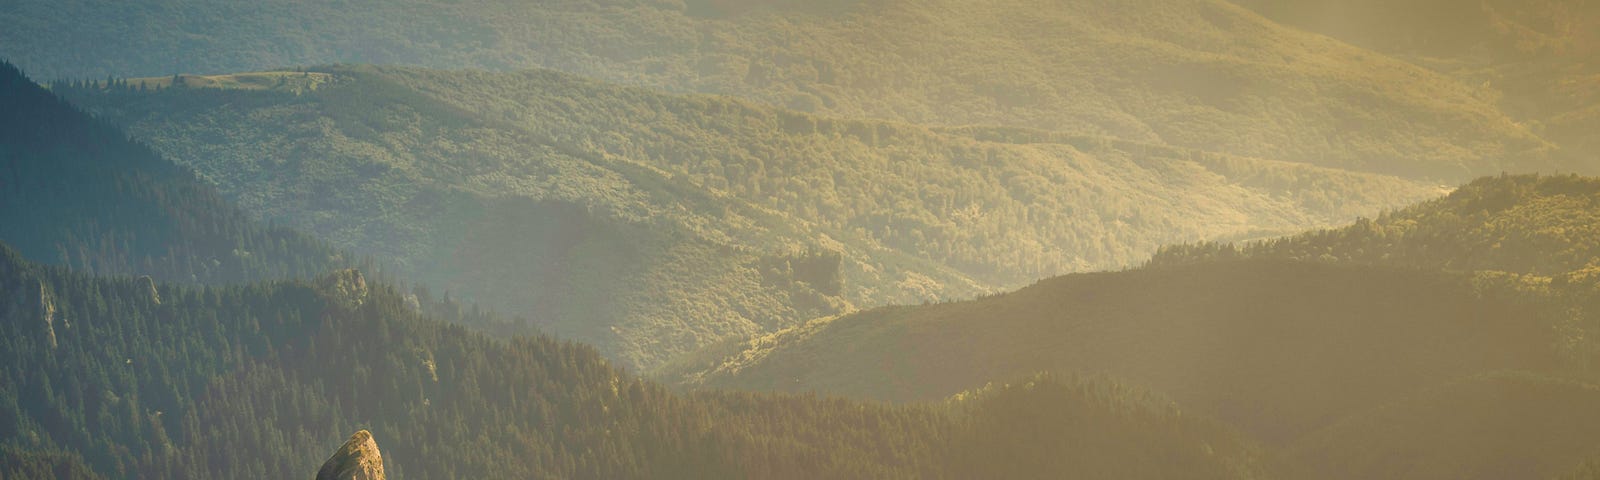 person standing on mountain against verdant landscape